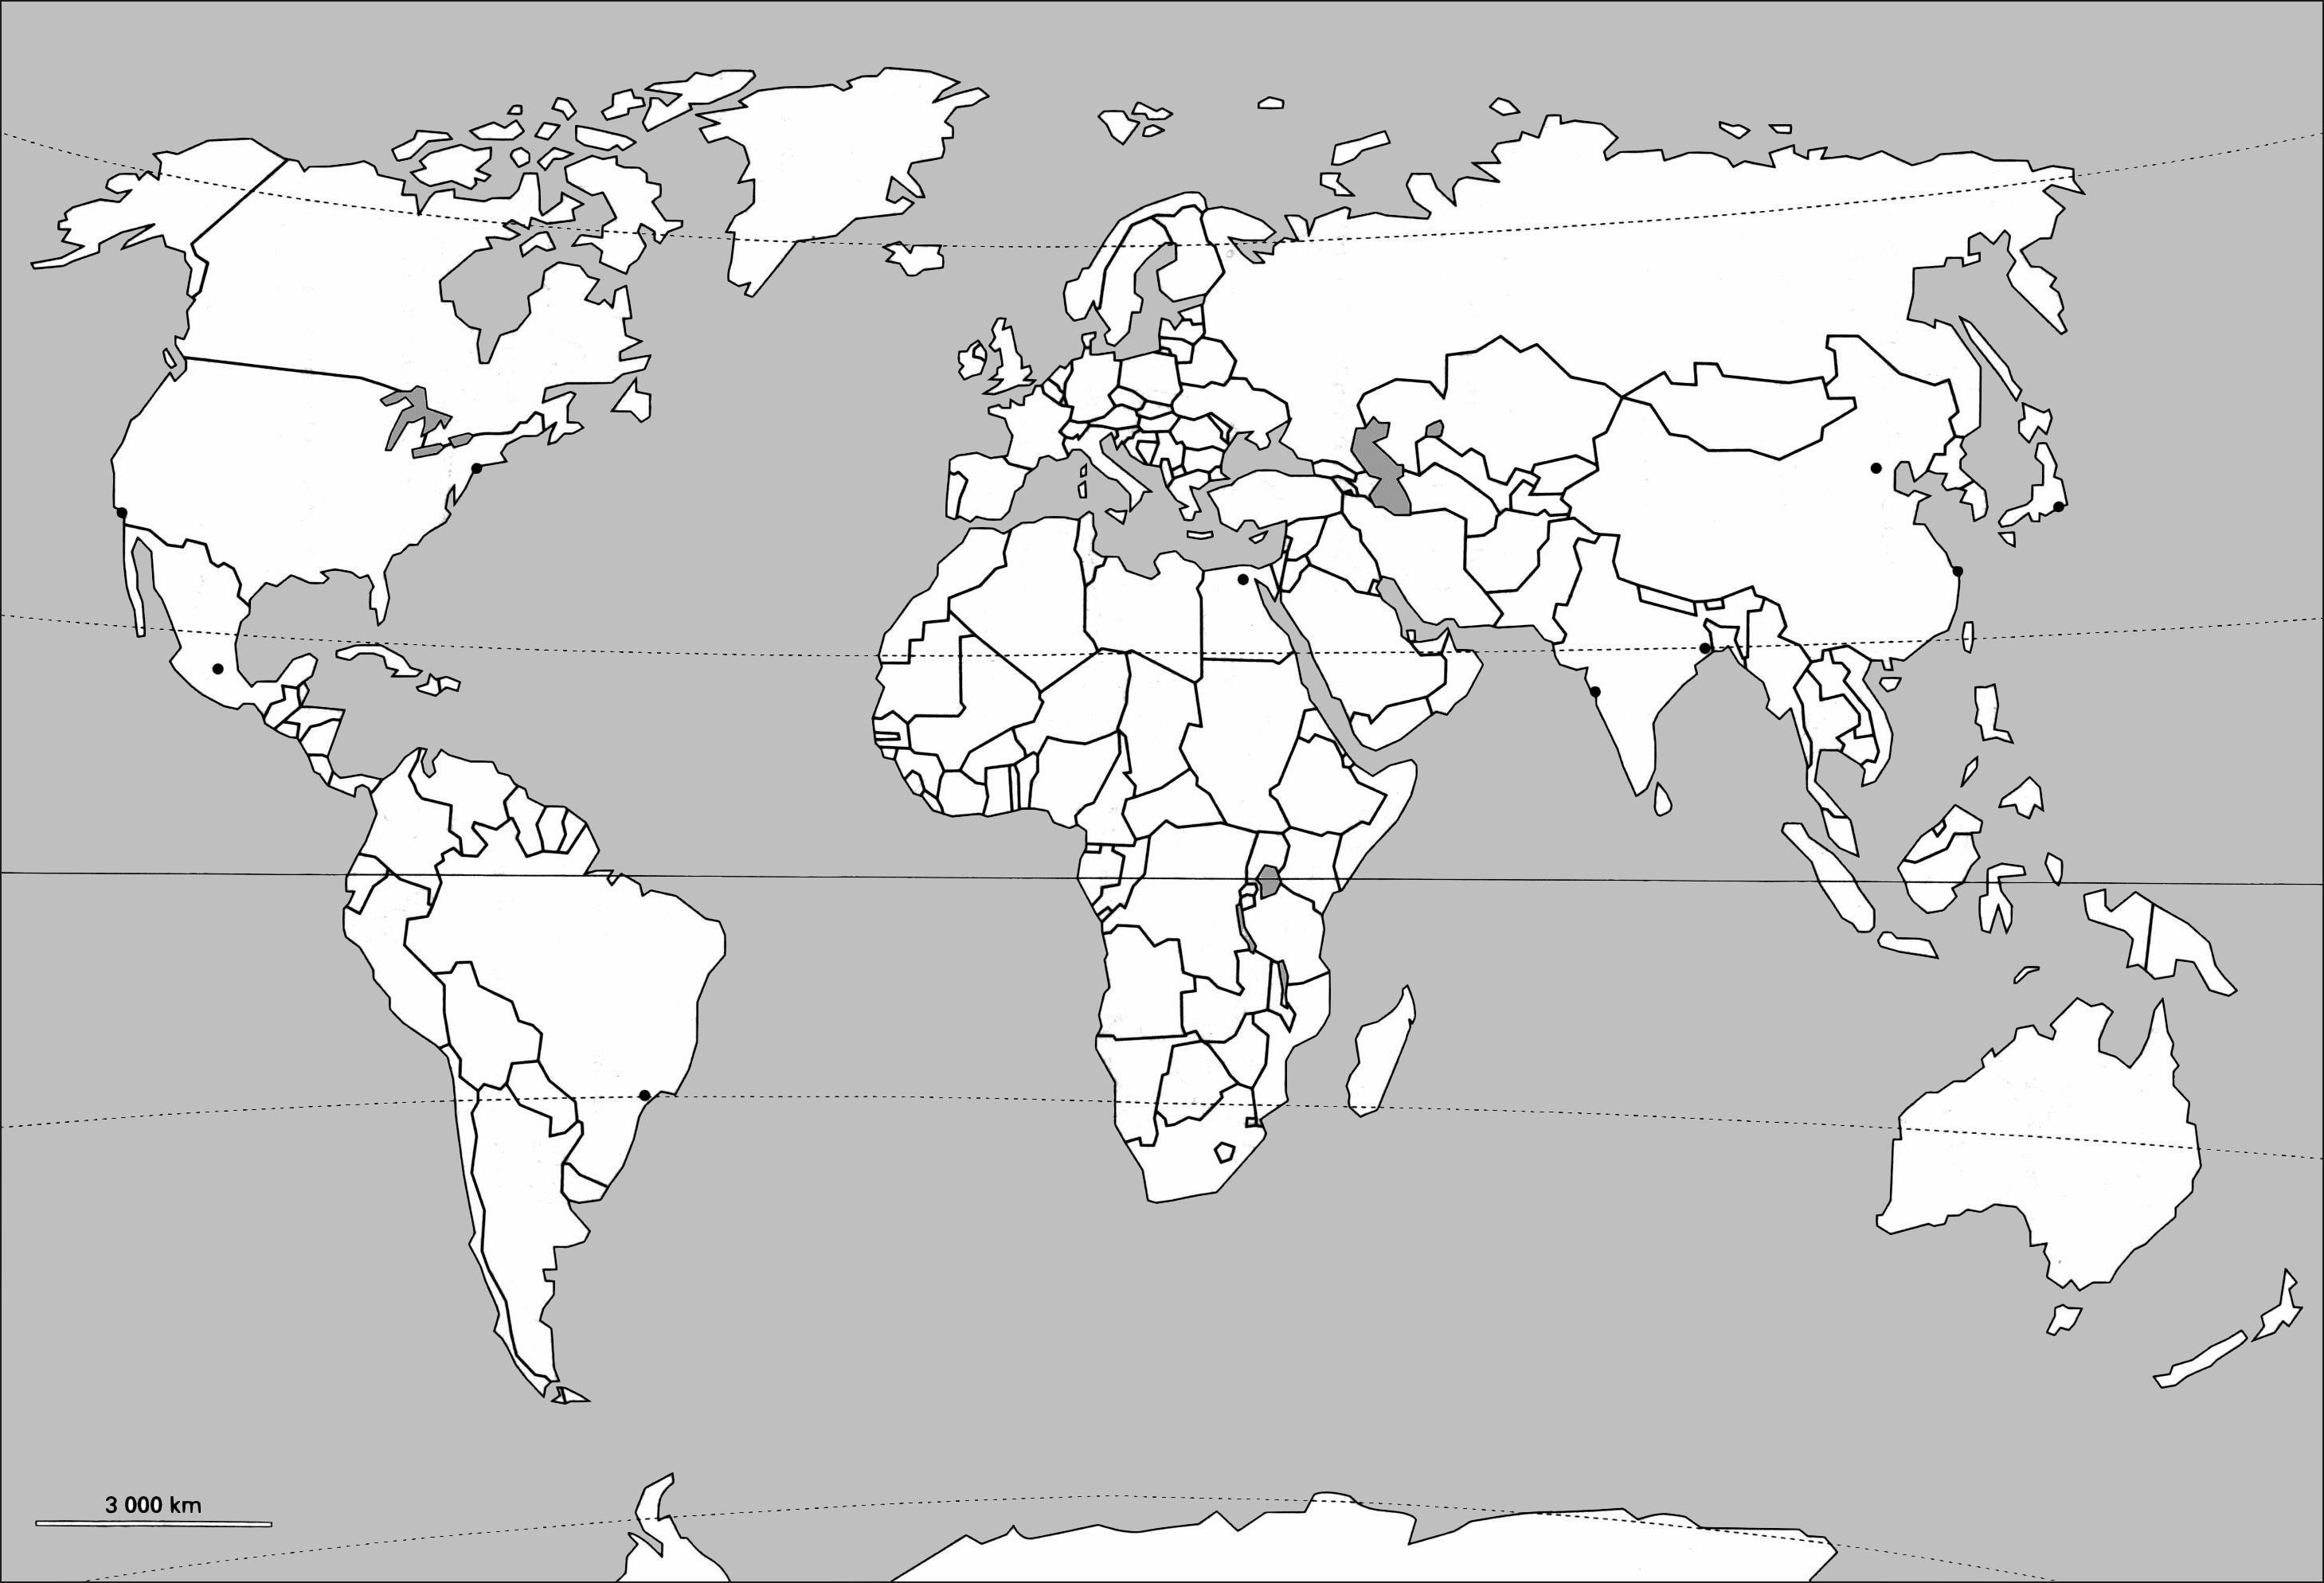 Cartograf.fr : Cartes des pays du monde : page 5